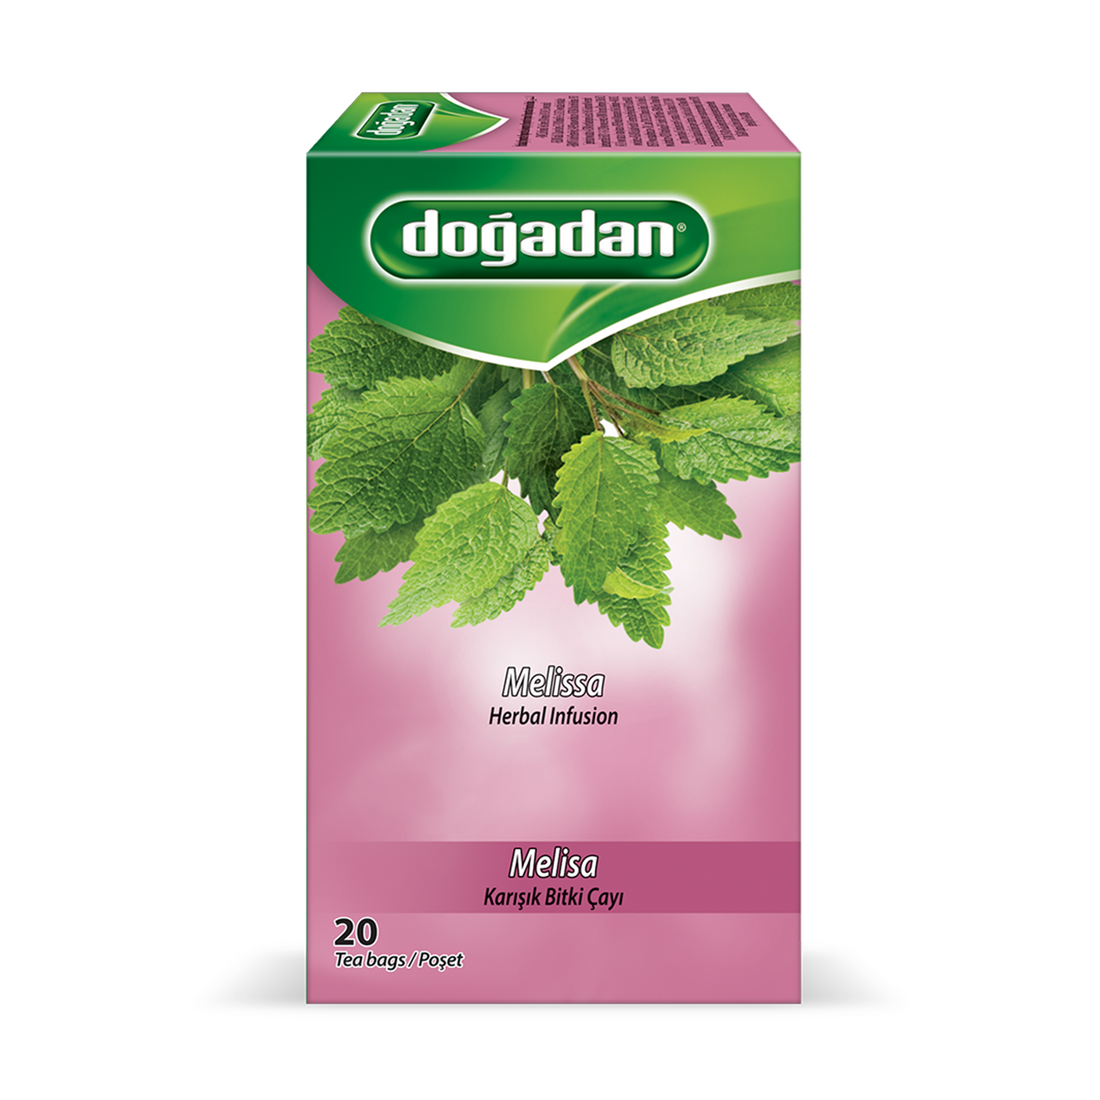 Dogadan Melisa (lemon balm) Mixed Herbal Tea 1.5g×20P | Dogadan Melisa Karisik Bitki Cayi | Melissa Herbal Infusion